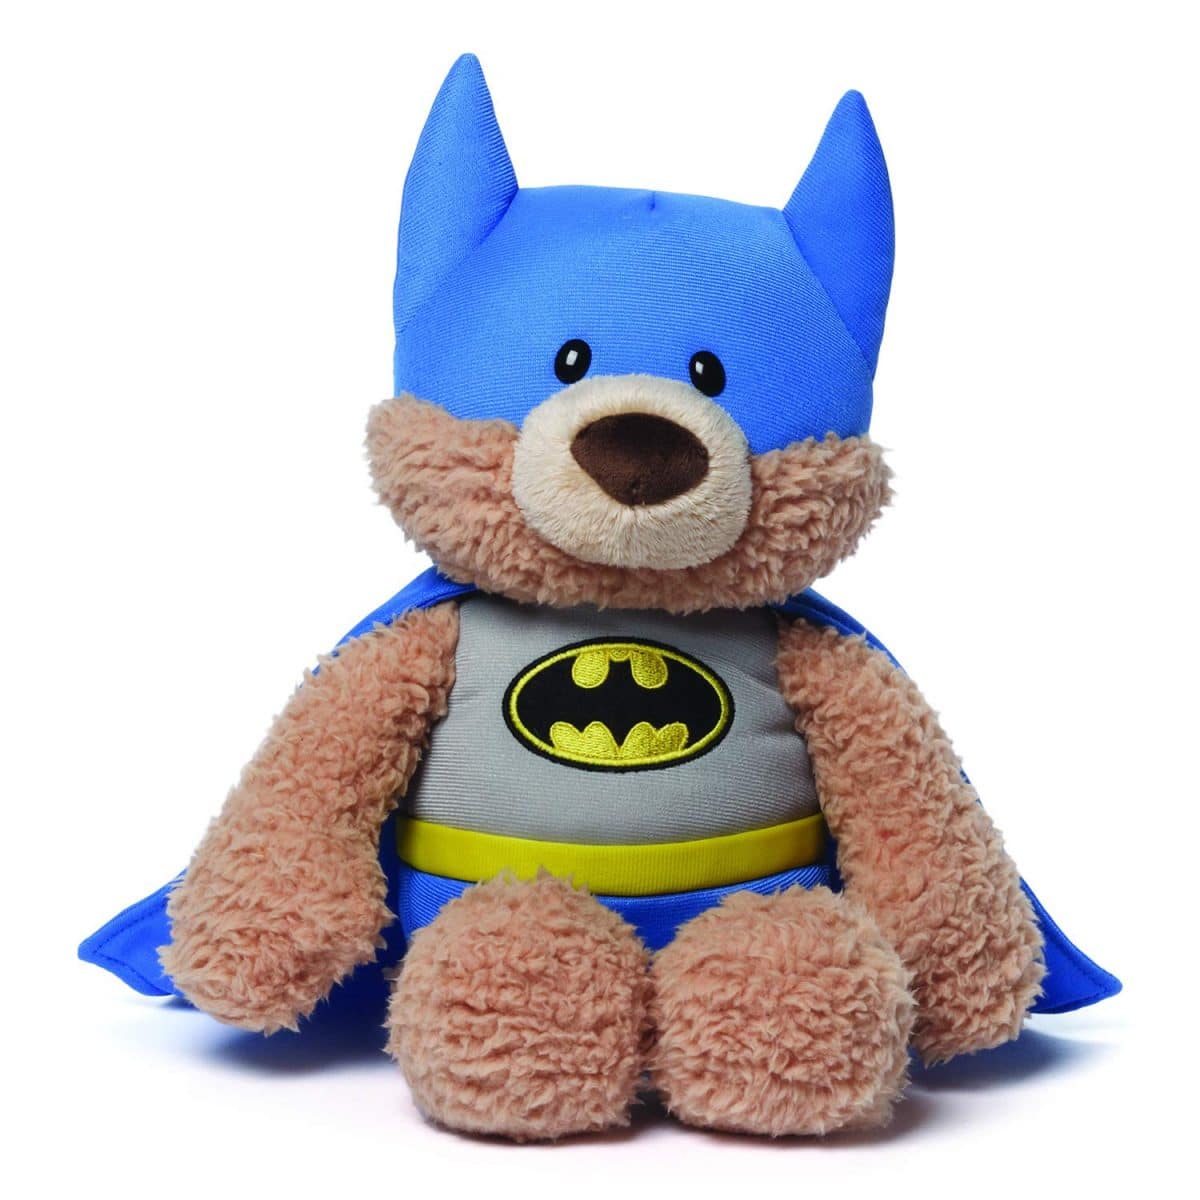 batman gifts for 4 year old boy